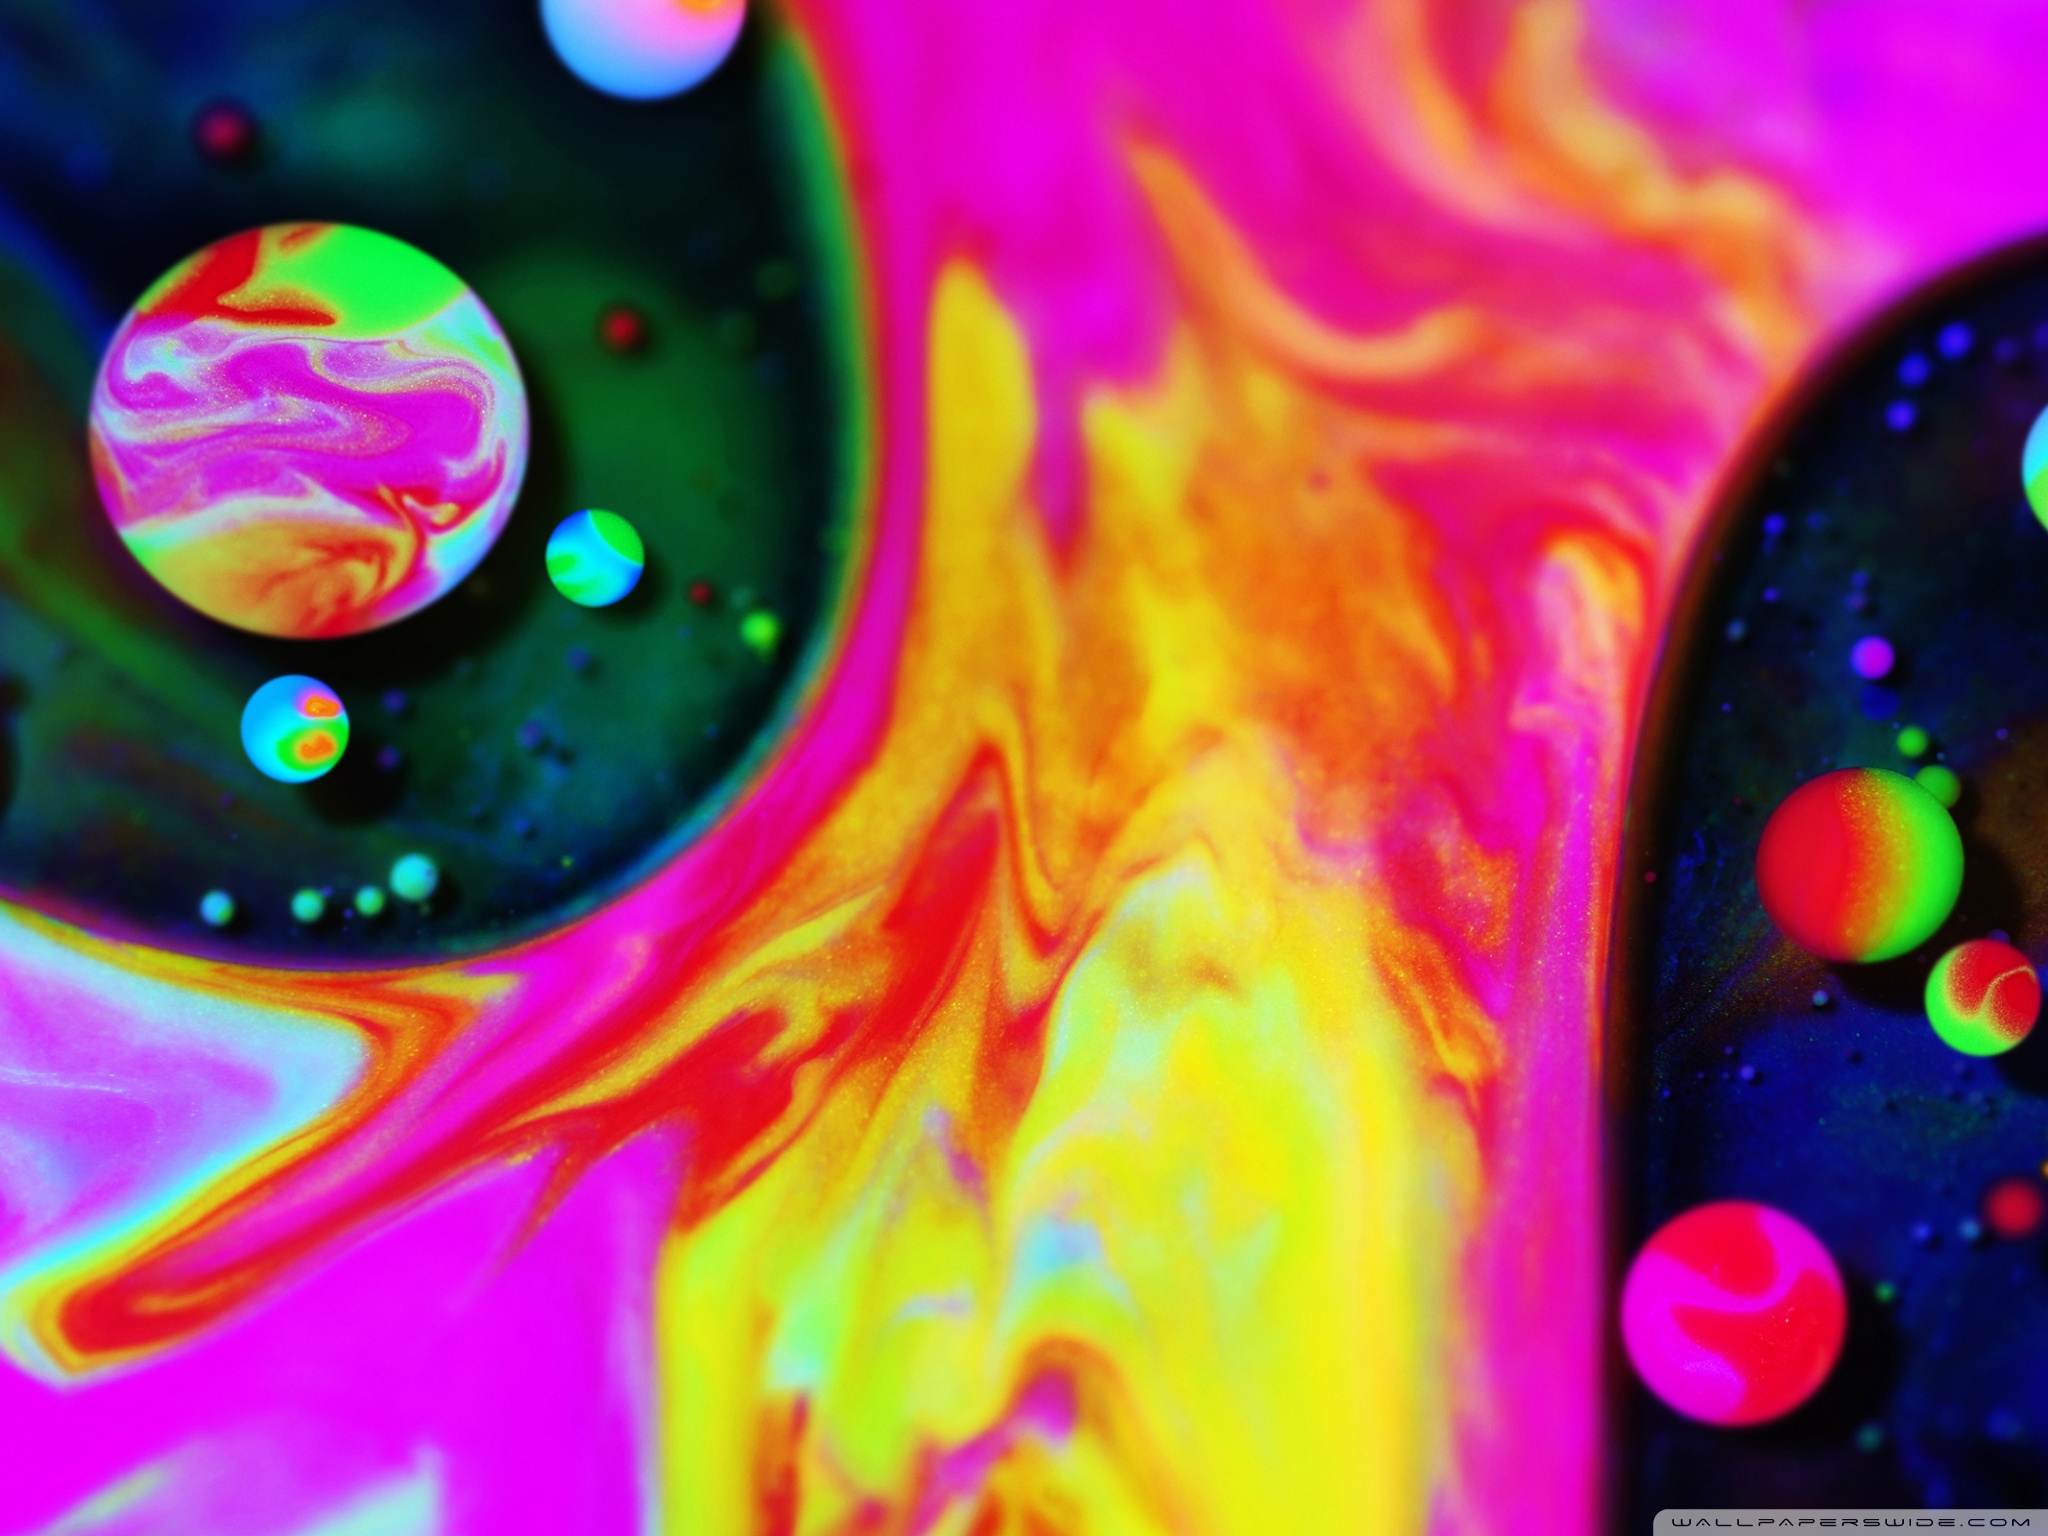 Neon Paint Splatter Macro Ultra HD Desktop Background Wallpaper for 4K UHD TV, Multi Display, Dual Monitor, Tablet